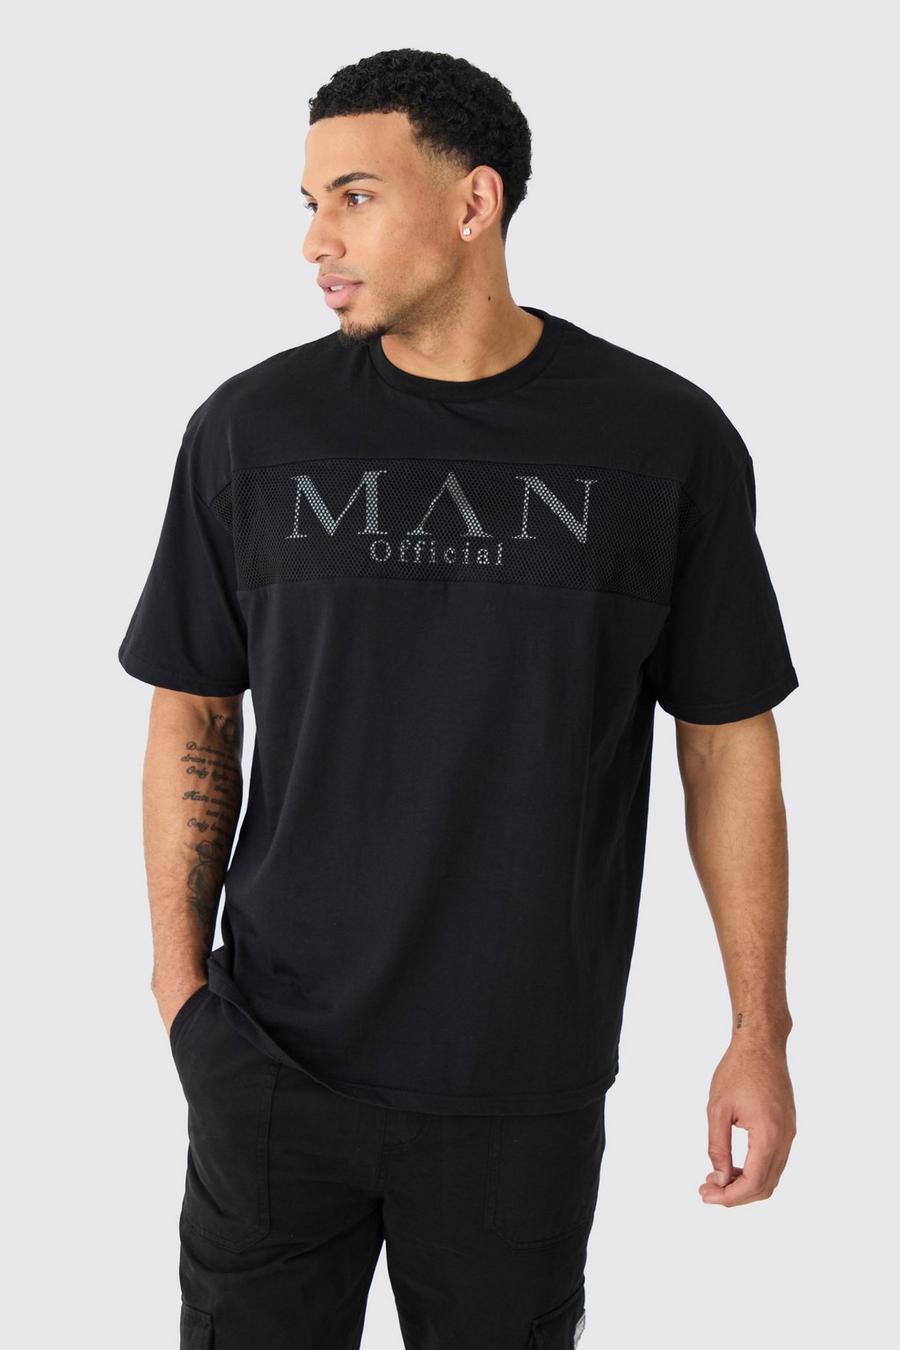 Black Oversized Man Official Mesh Layer T-shirt